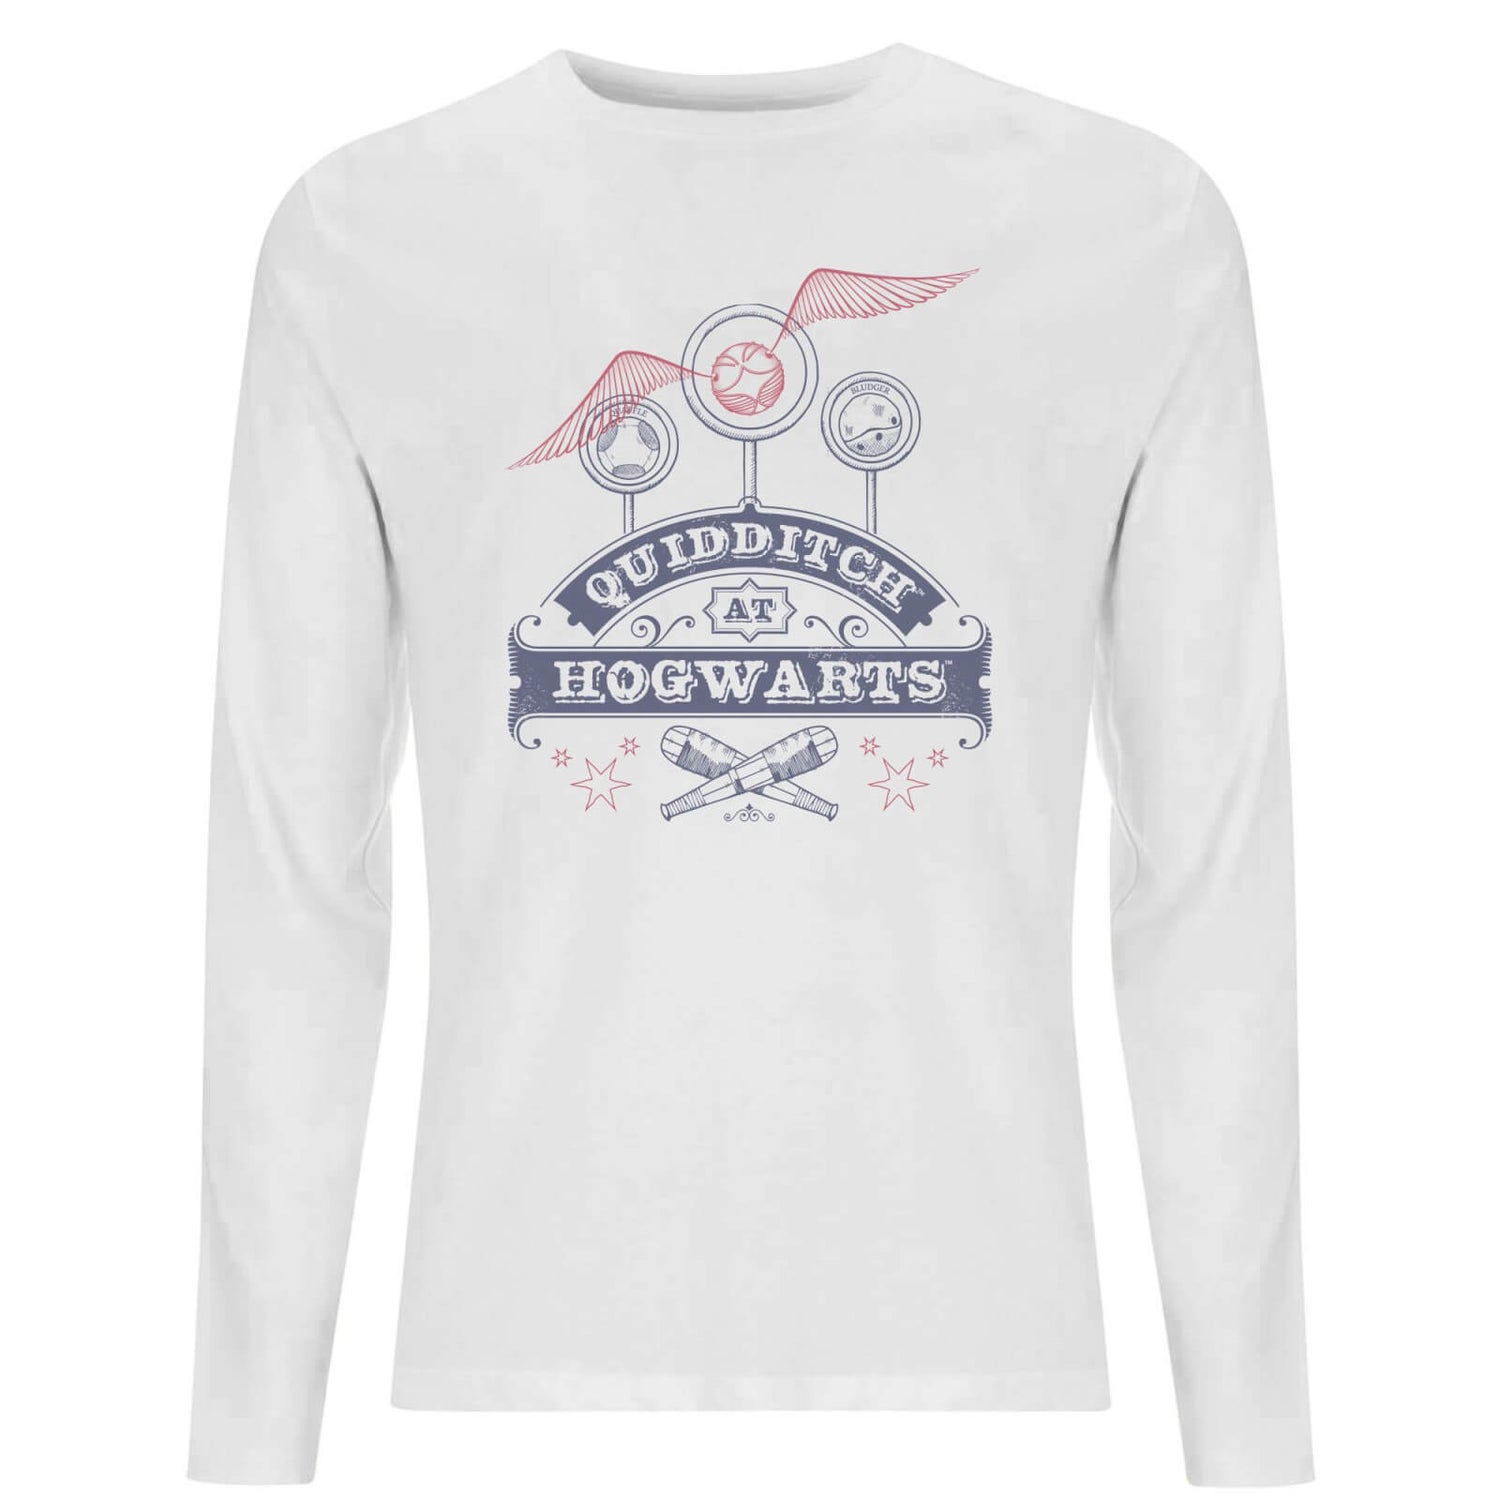 Harry Potter Quidditch At Hogwarts Men's Long Sleeve T-Shirt - White